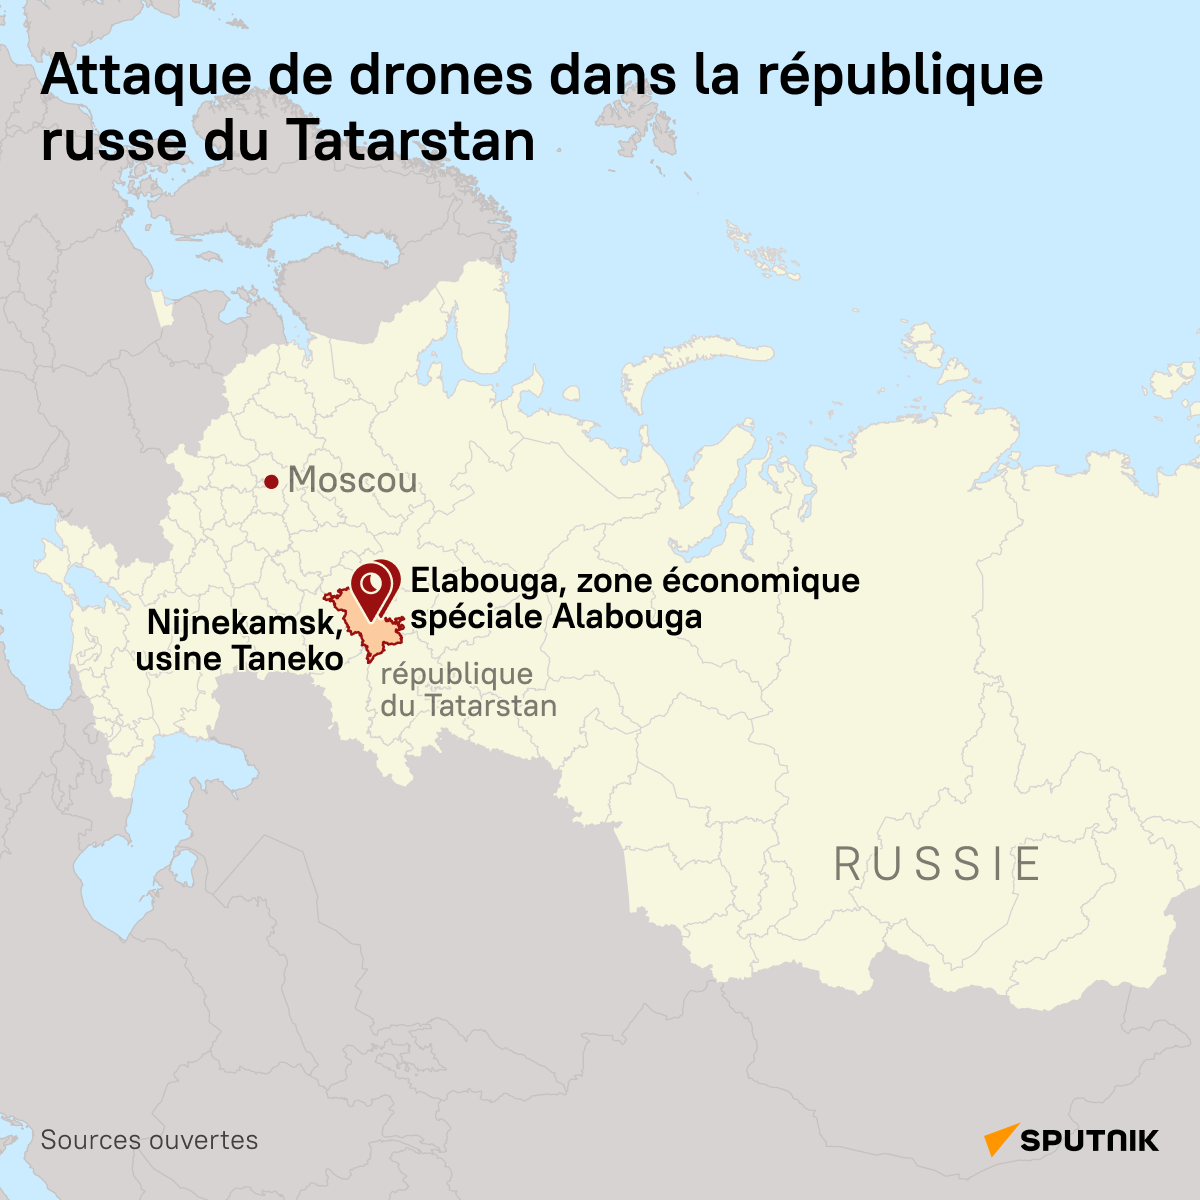 Attaque de drones au Tatarstan, desk - Sputnik Afrique